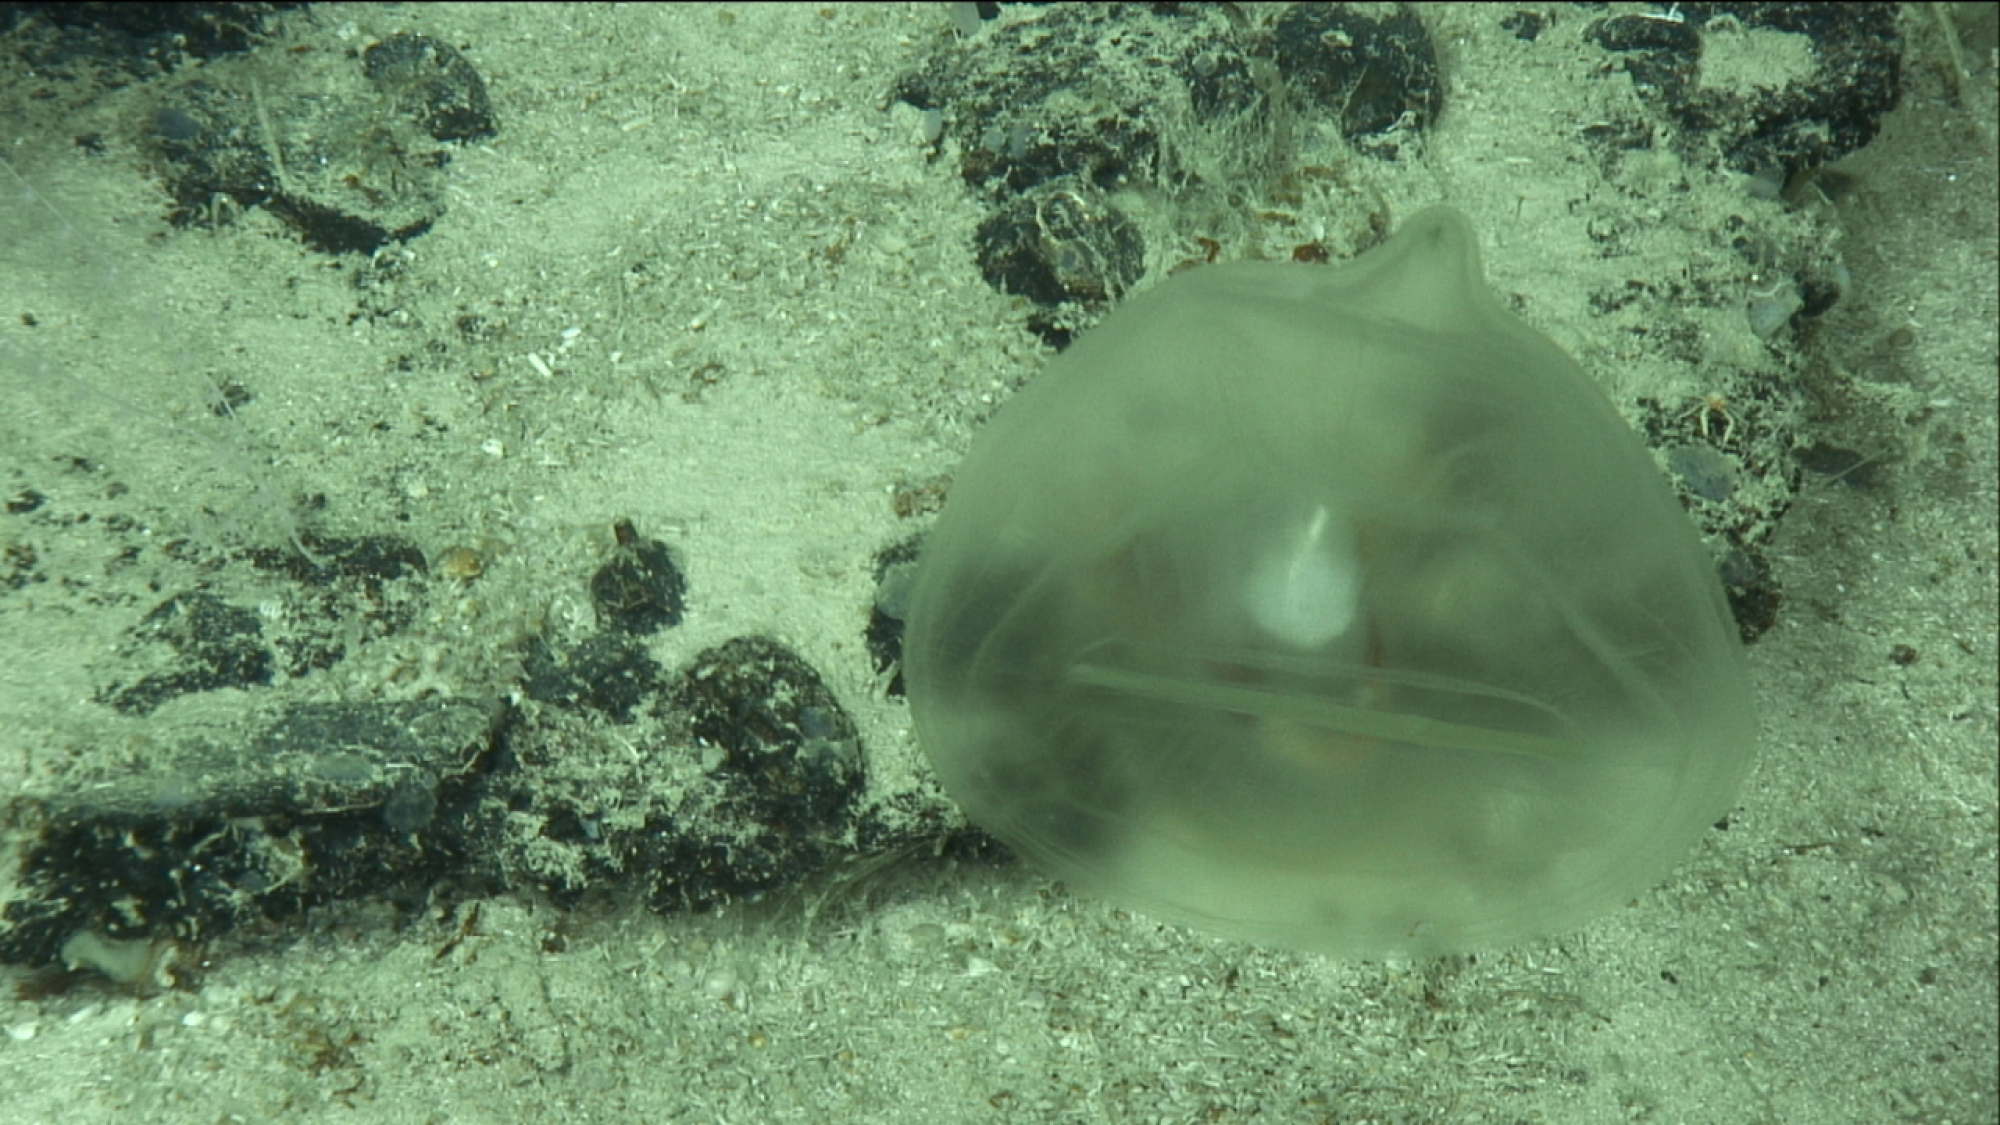 a transparent ocean organism swimming above the ocean floor